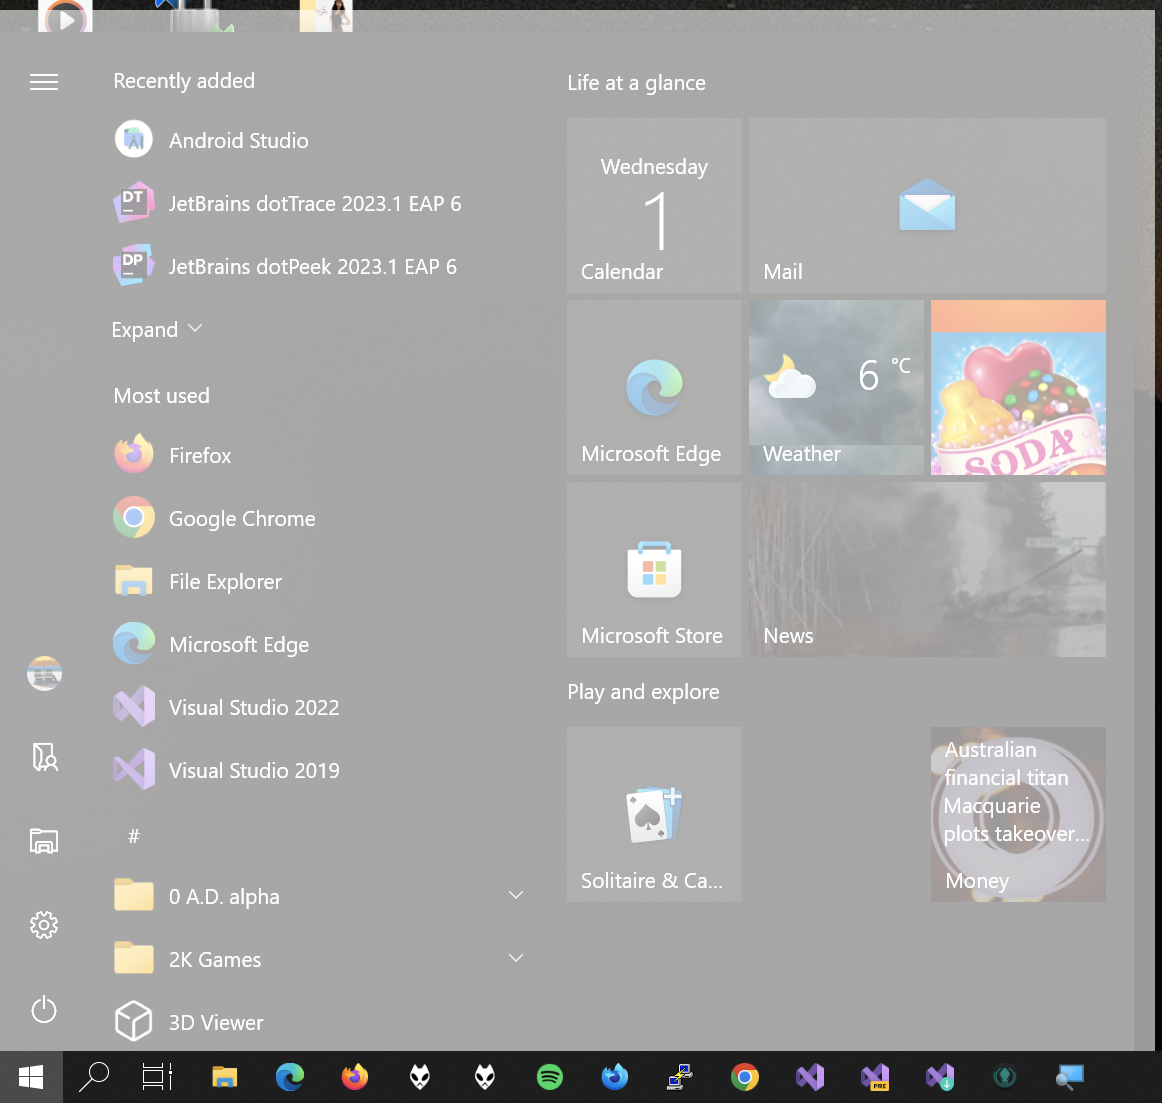 The Windows 10 start menu, but greyed out.